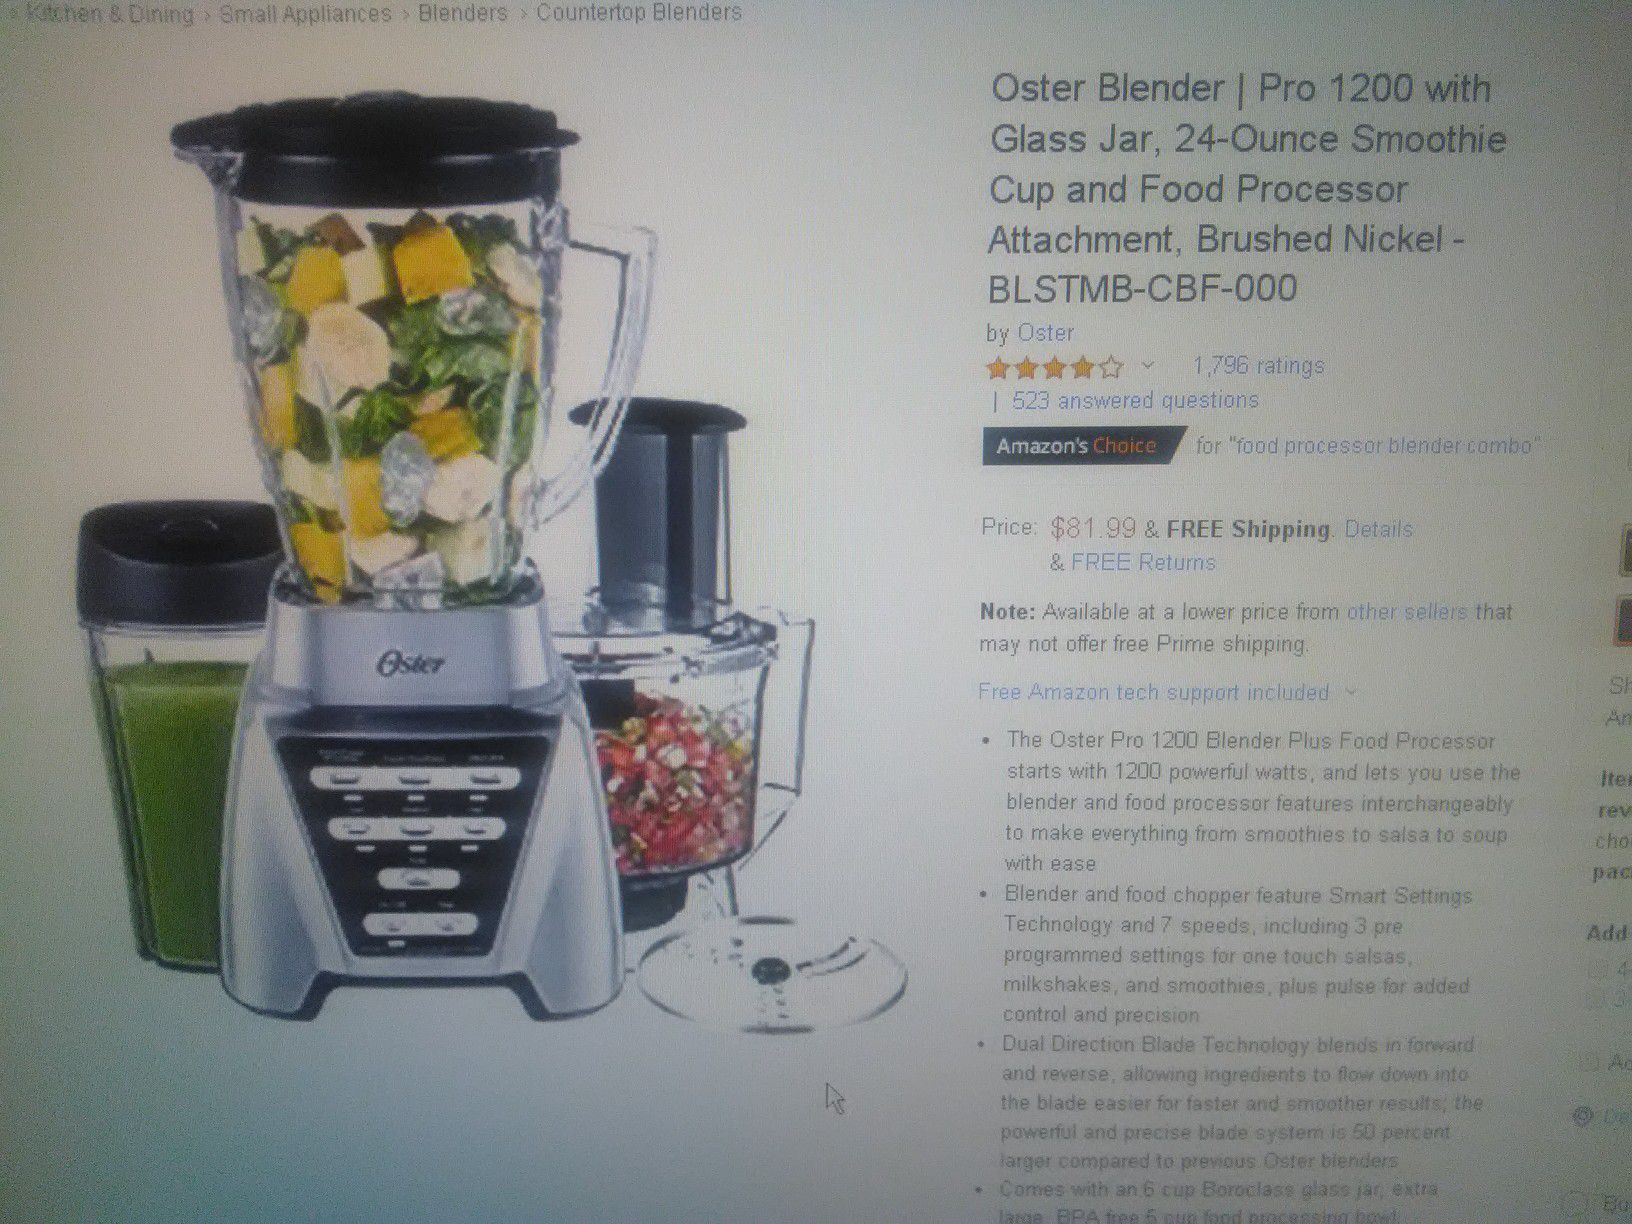 Oster Blender Pro 1200 with glass jar $60